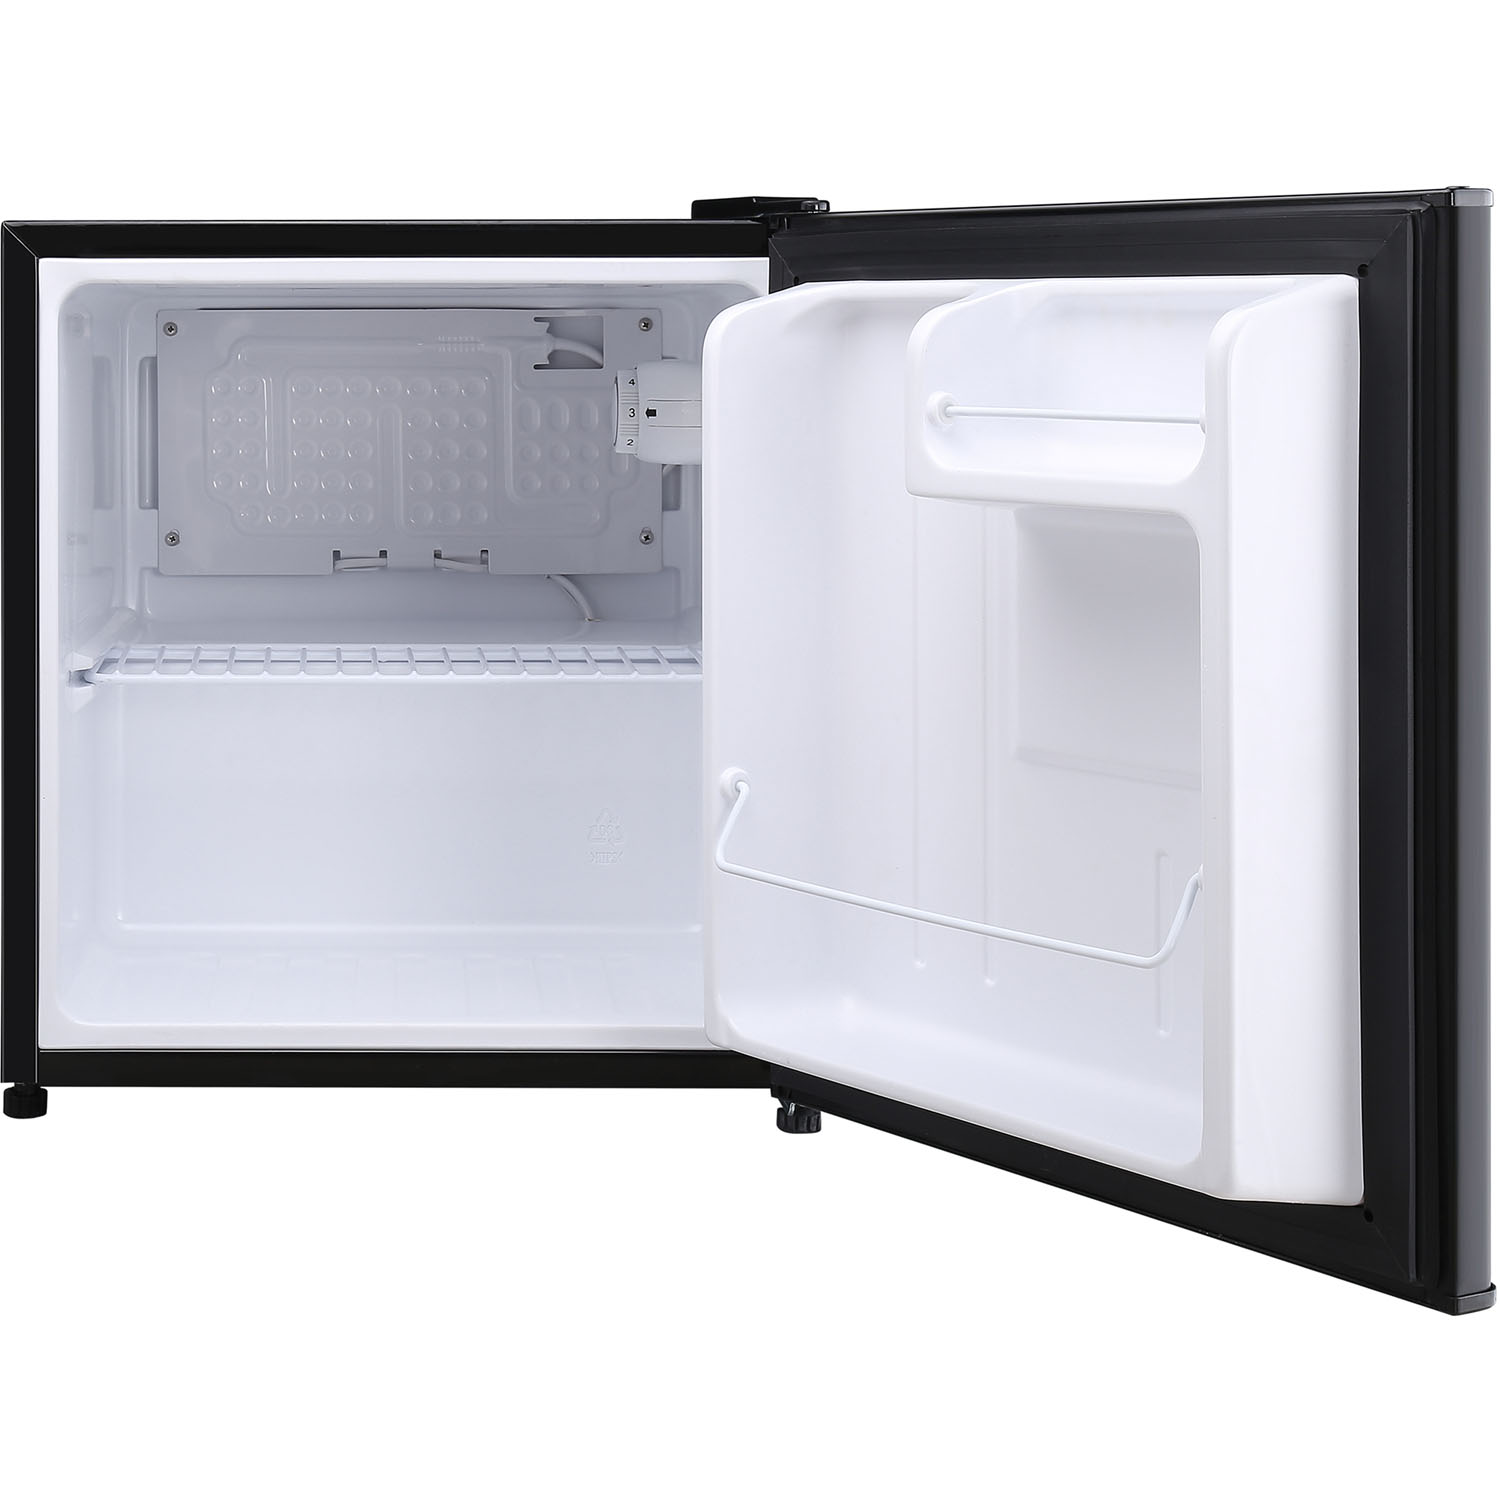 Magic Chef Energy Star 1.7 Cu. Ft. Mini All-Refrigerator in Black - image 4 of 4